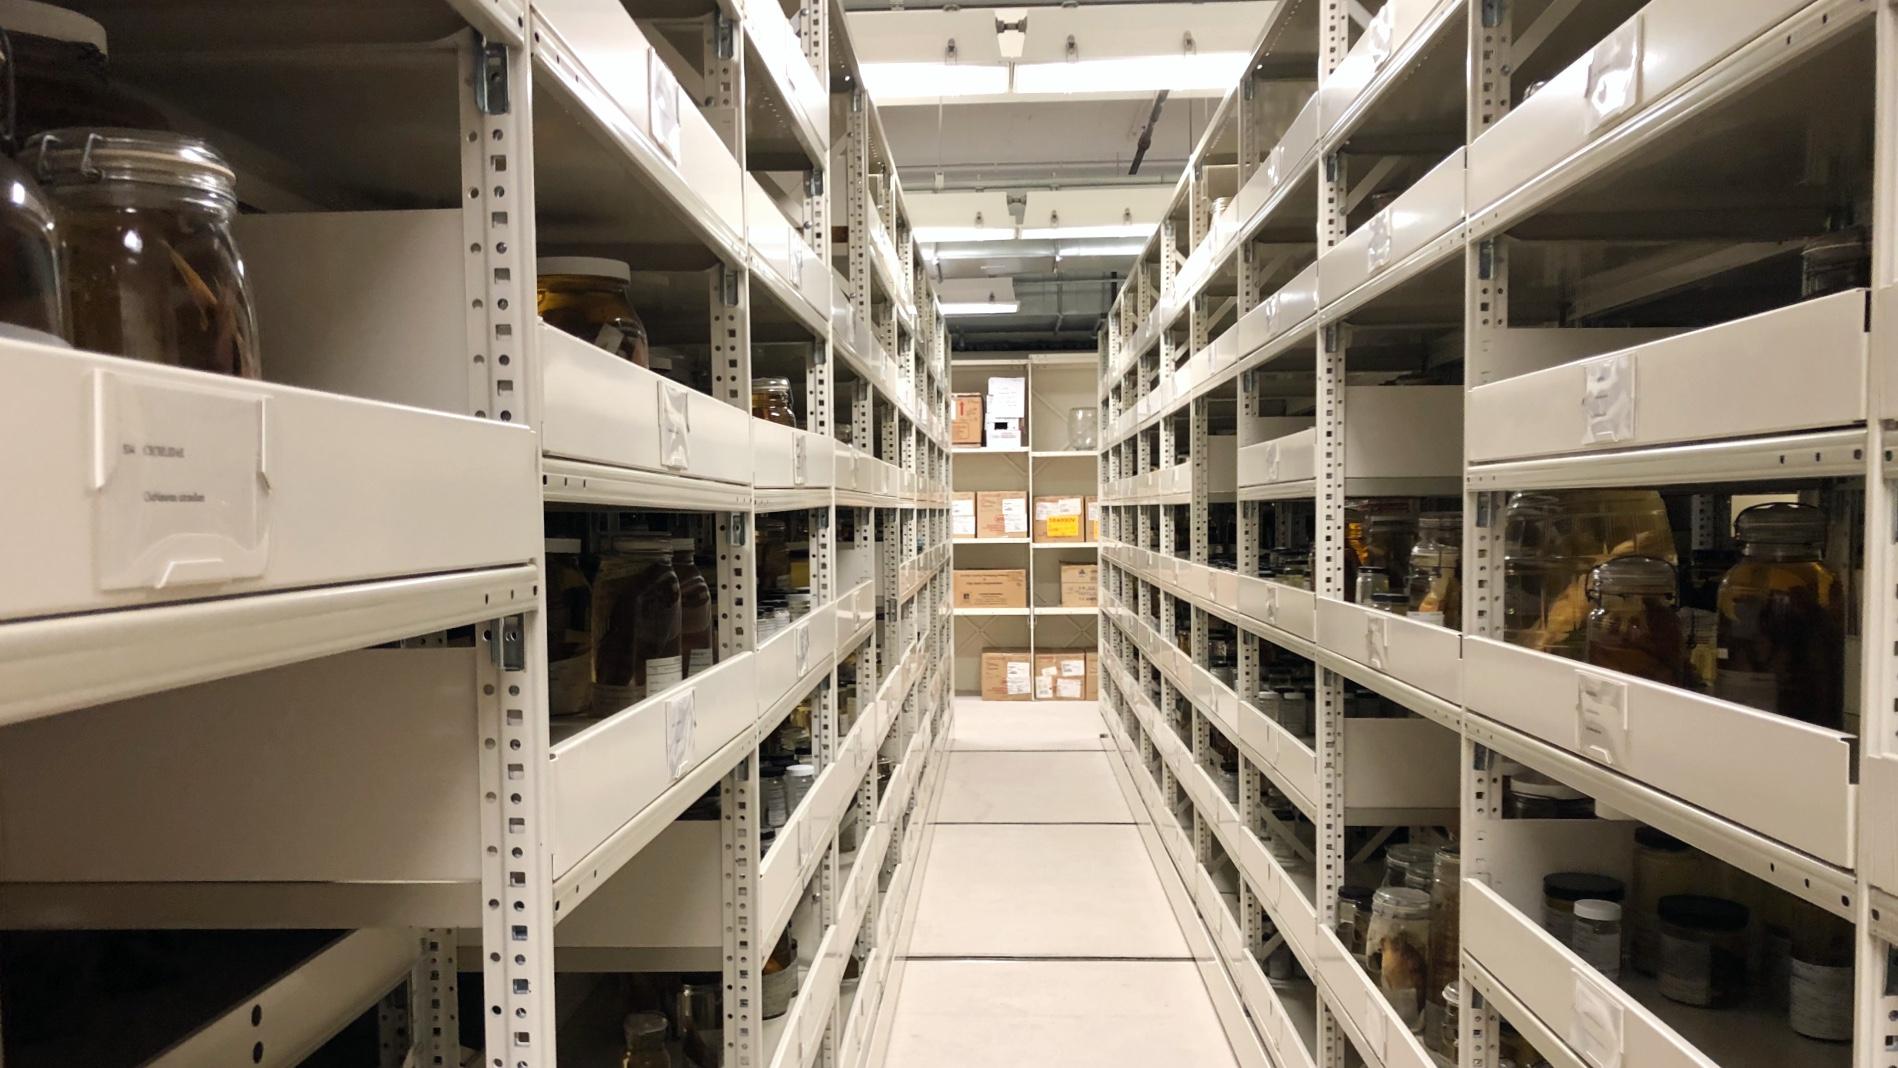 The Field Museum's underground Collections Resource Center. (Patty Wetli / WTTW News) 